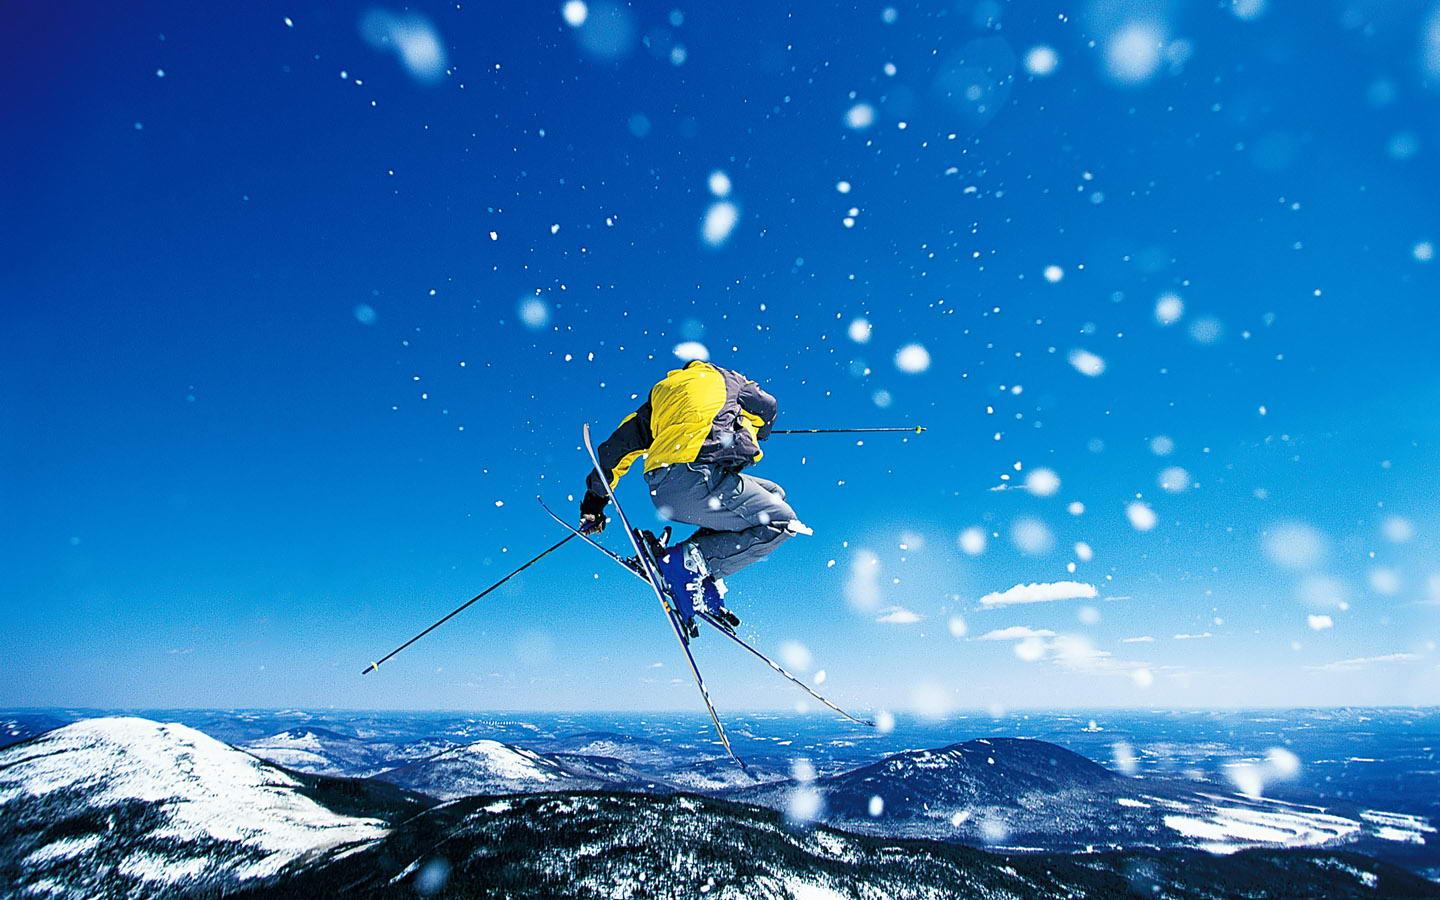 fonds d'écran hd extrêmes,ski acrobatique,ski,neige,sport extrême,ciel